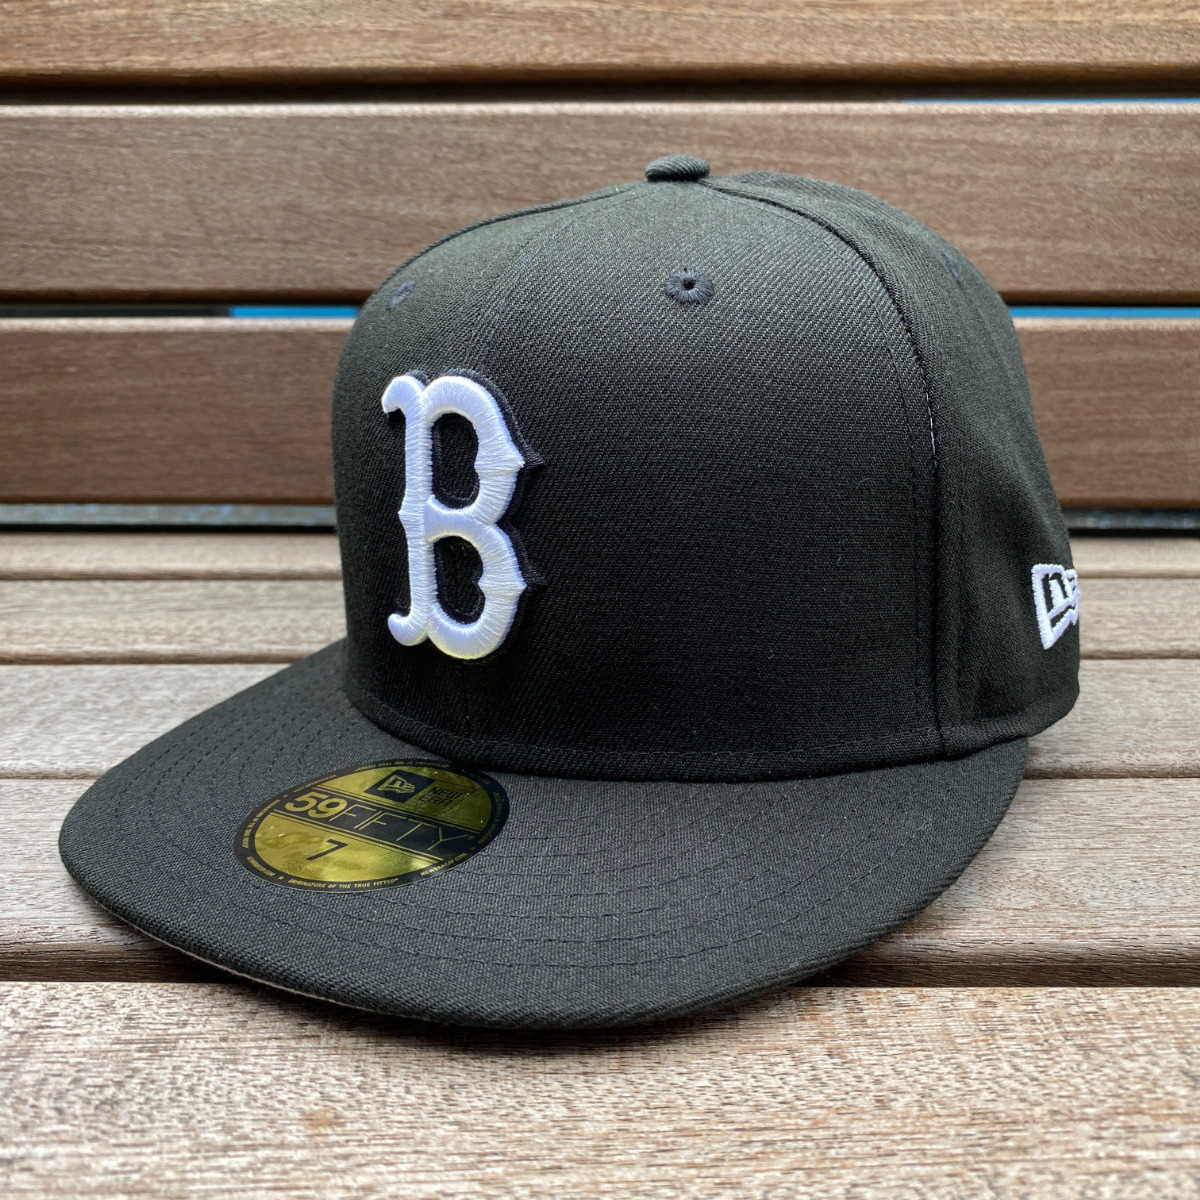 USA正規品 【7.1/8】 NEWERA ニューエラ MLB ボストン レッドソックス Redsox 特別色 ブラックエディション 59FIFTY メジャーリーグ 帽子_画像1